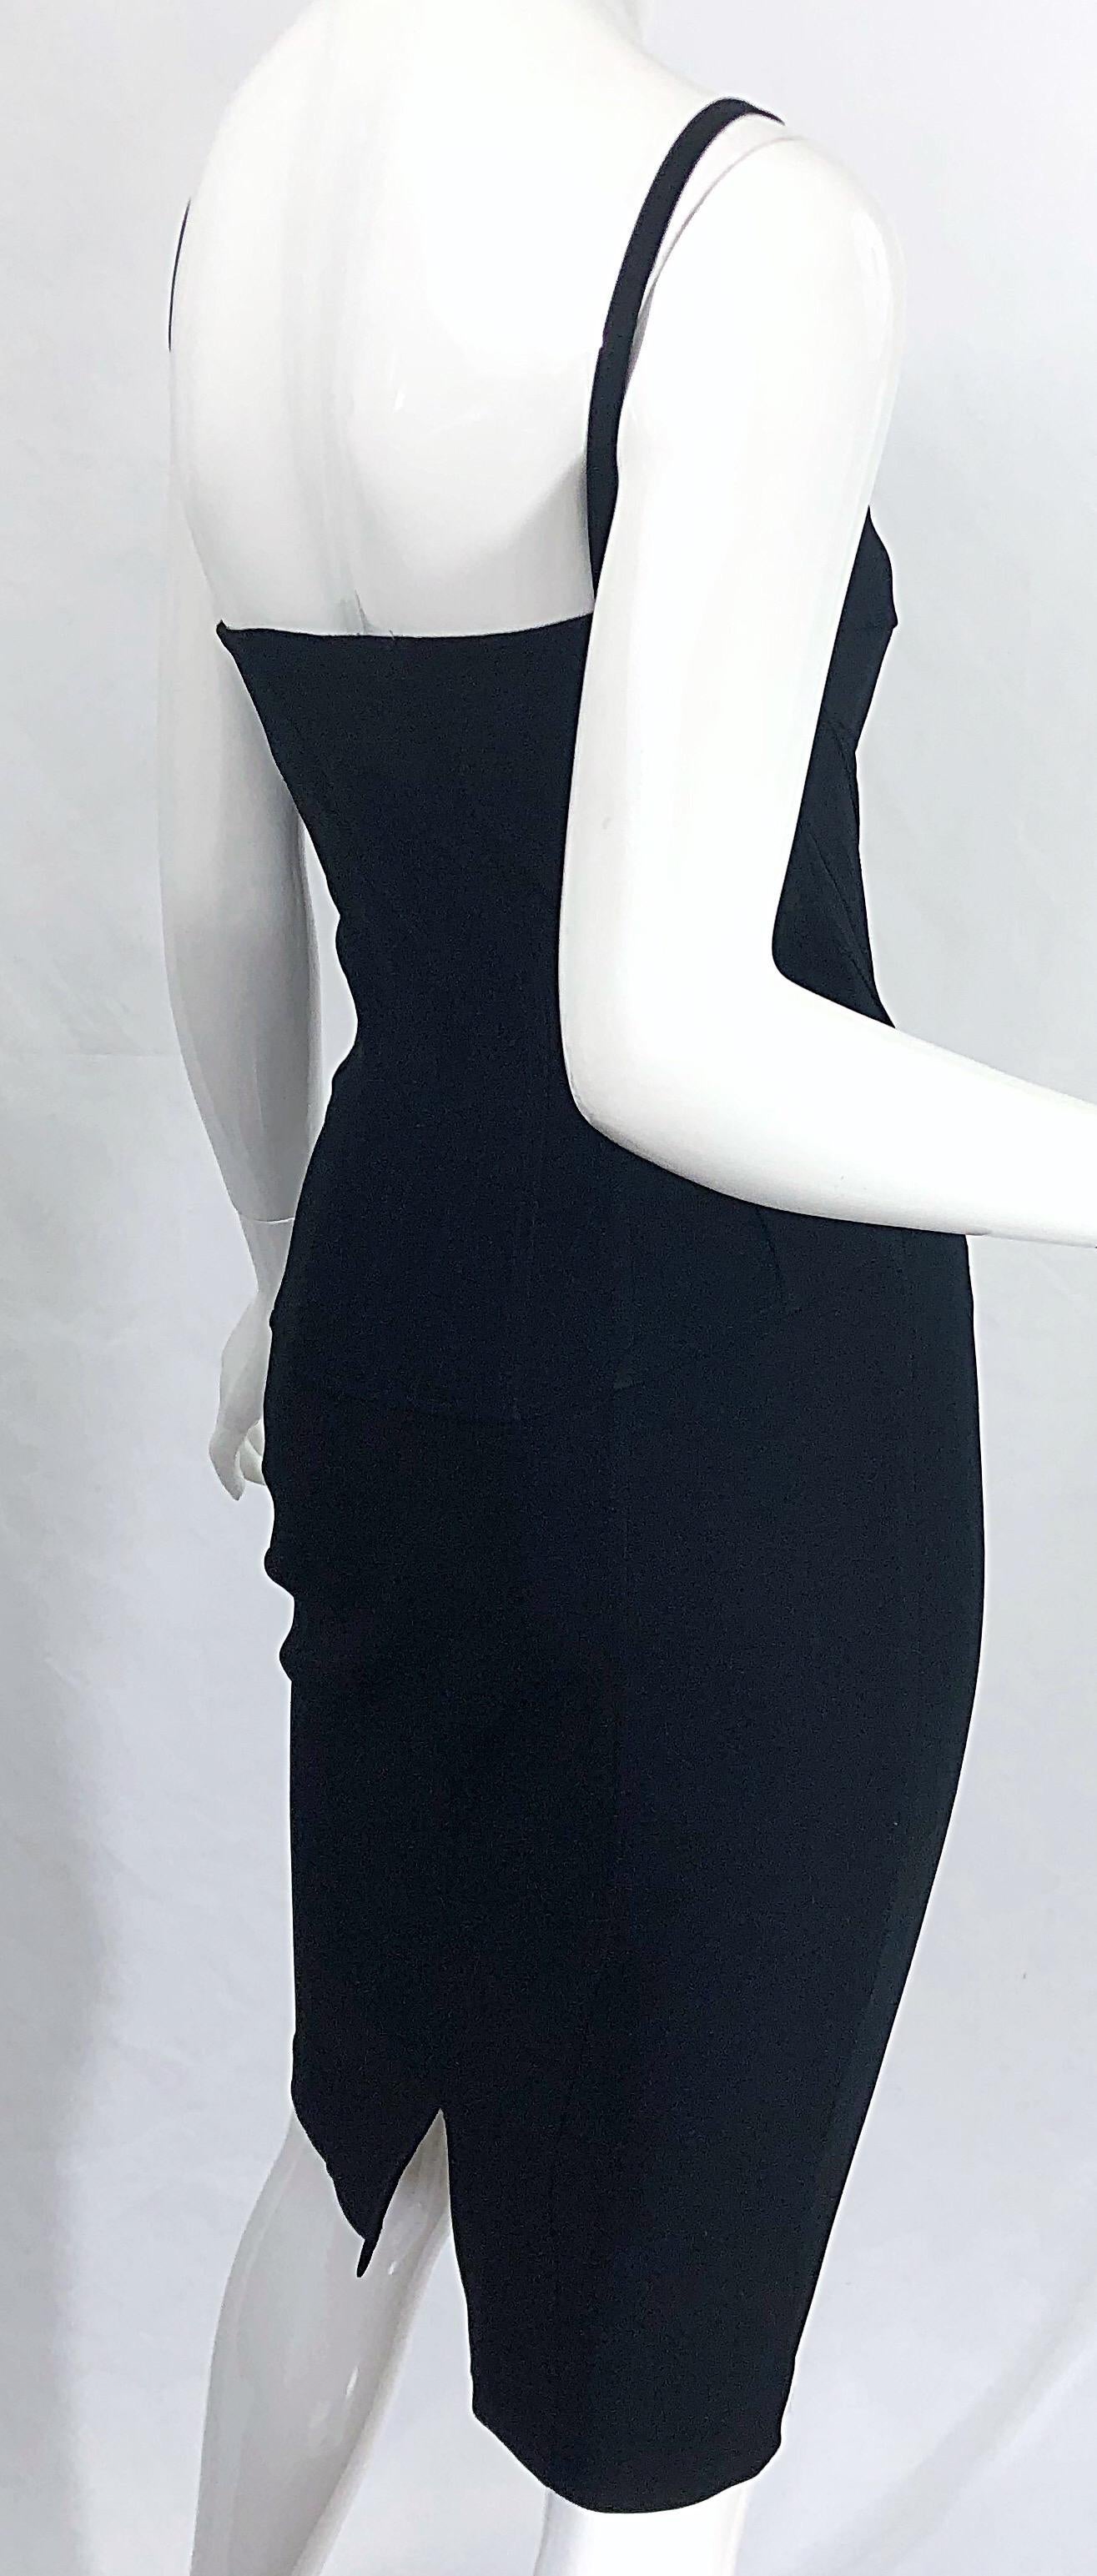 1990s Dolce & Gabbana Black Corset Dress Size 42 US 6 - 8 Vintage 90s Iconic LBD For Sale 4